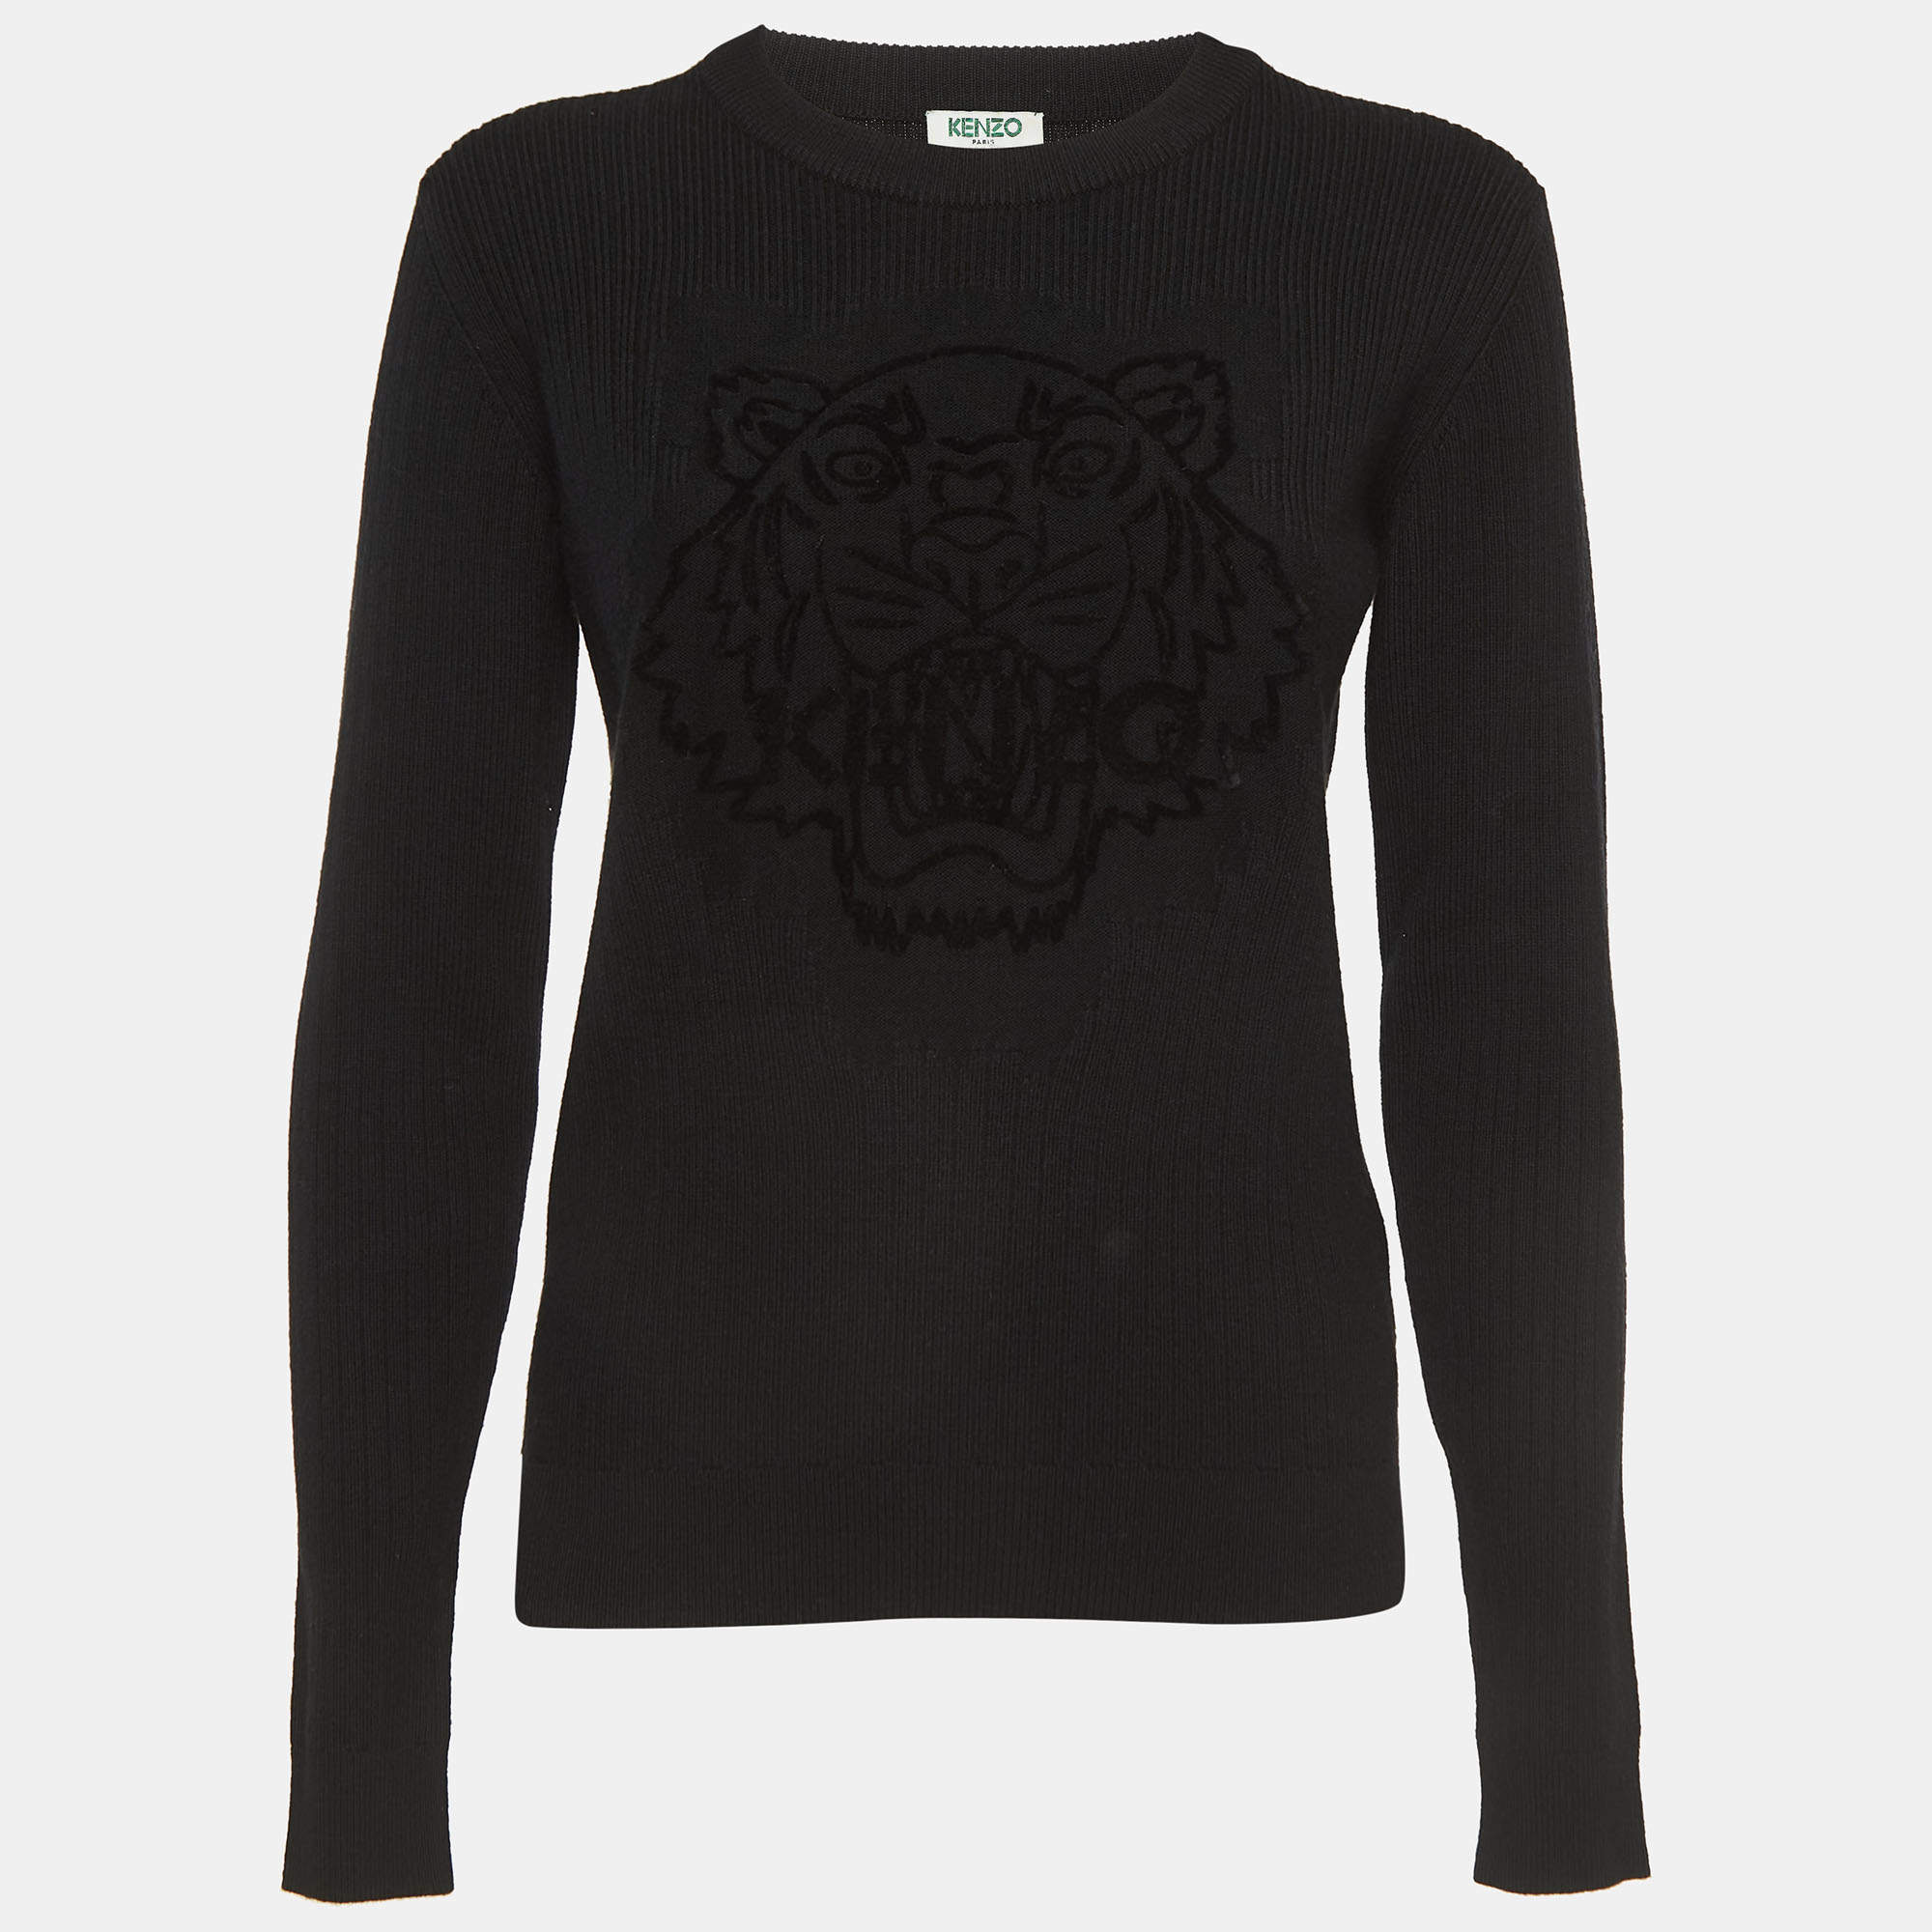 Kenzo Black Tiger Patterned Wool Knit Sweatshirt M